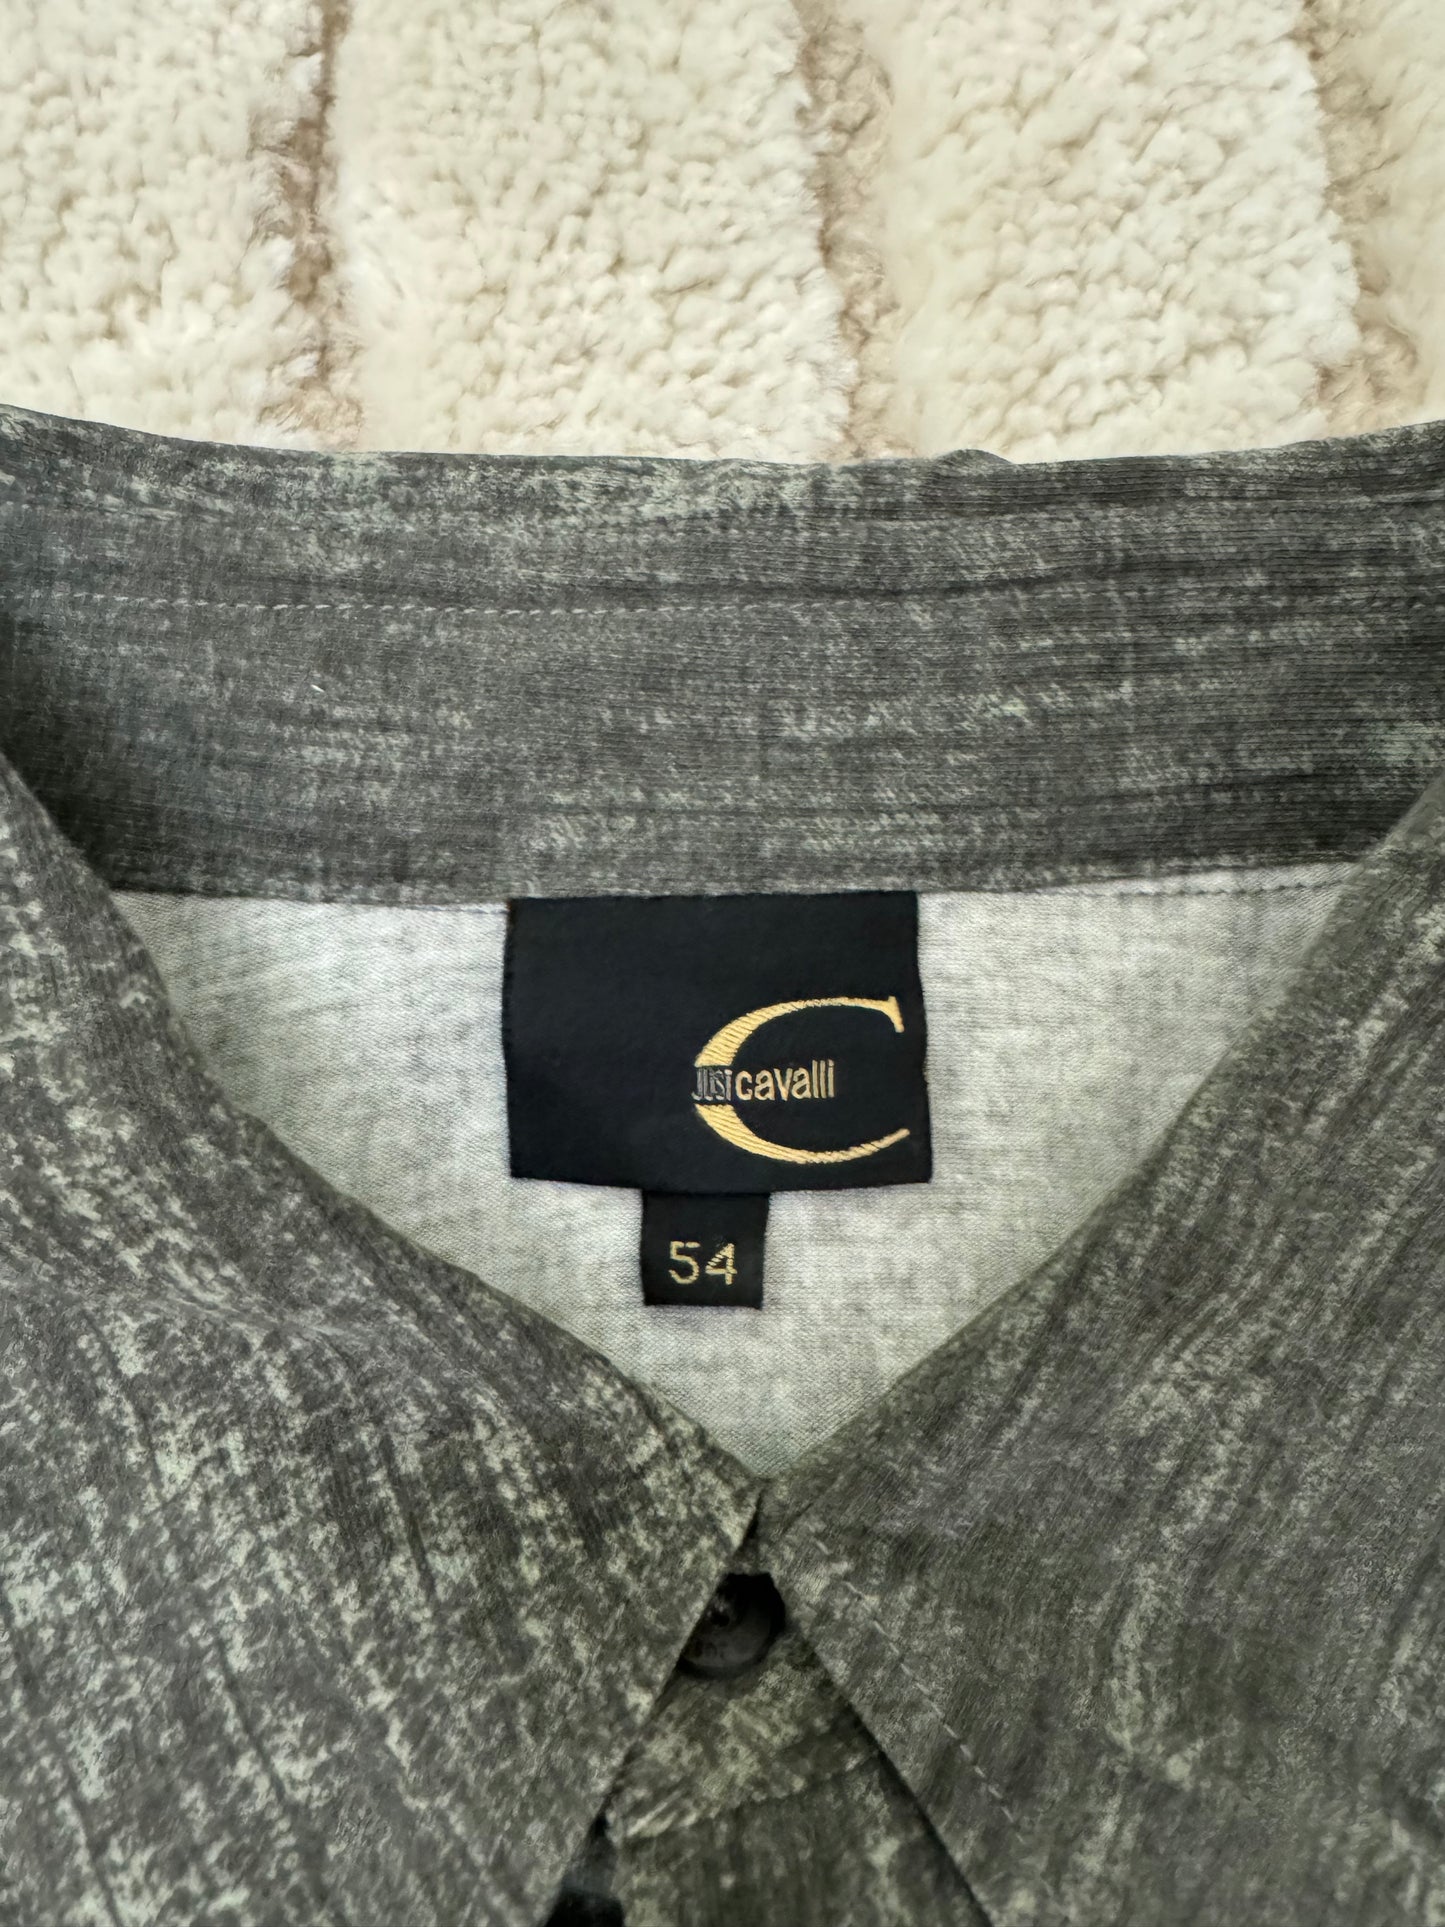 00s Cavalli Discarded Fabric Shirt (M/L)